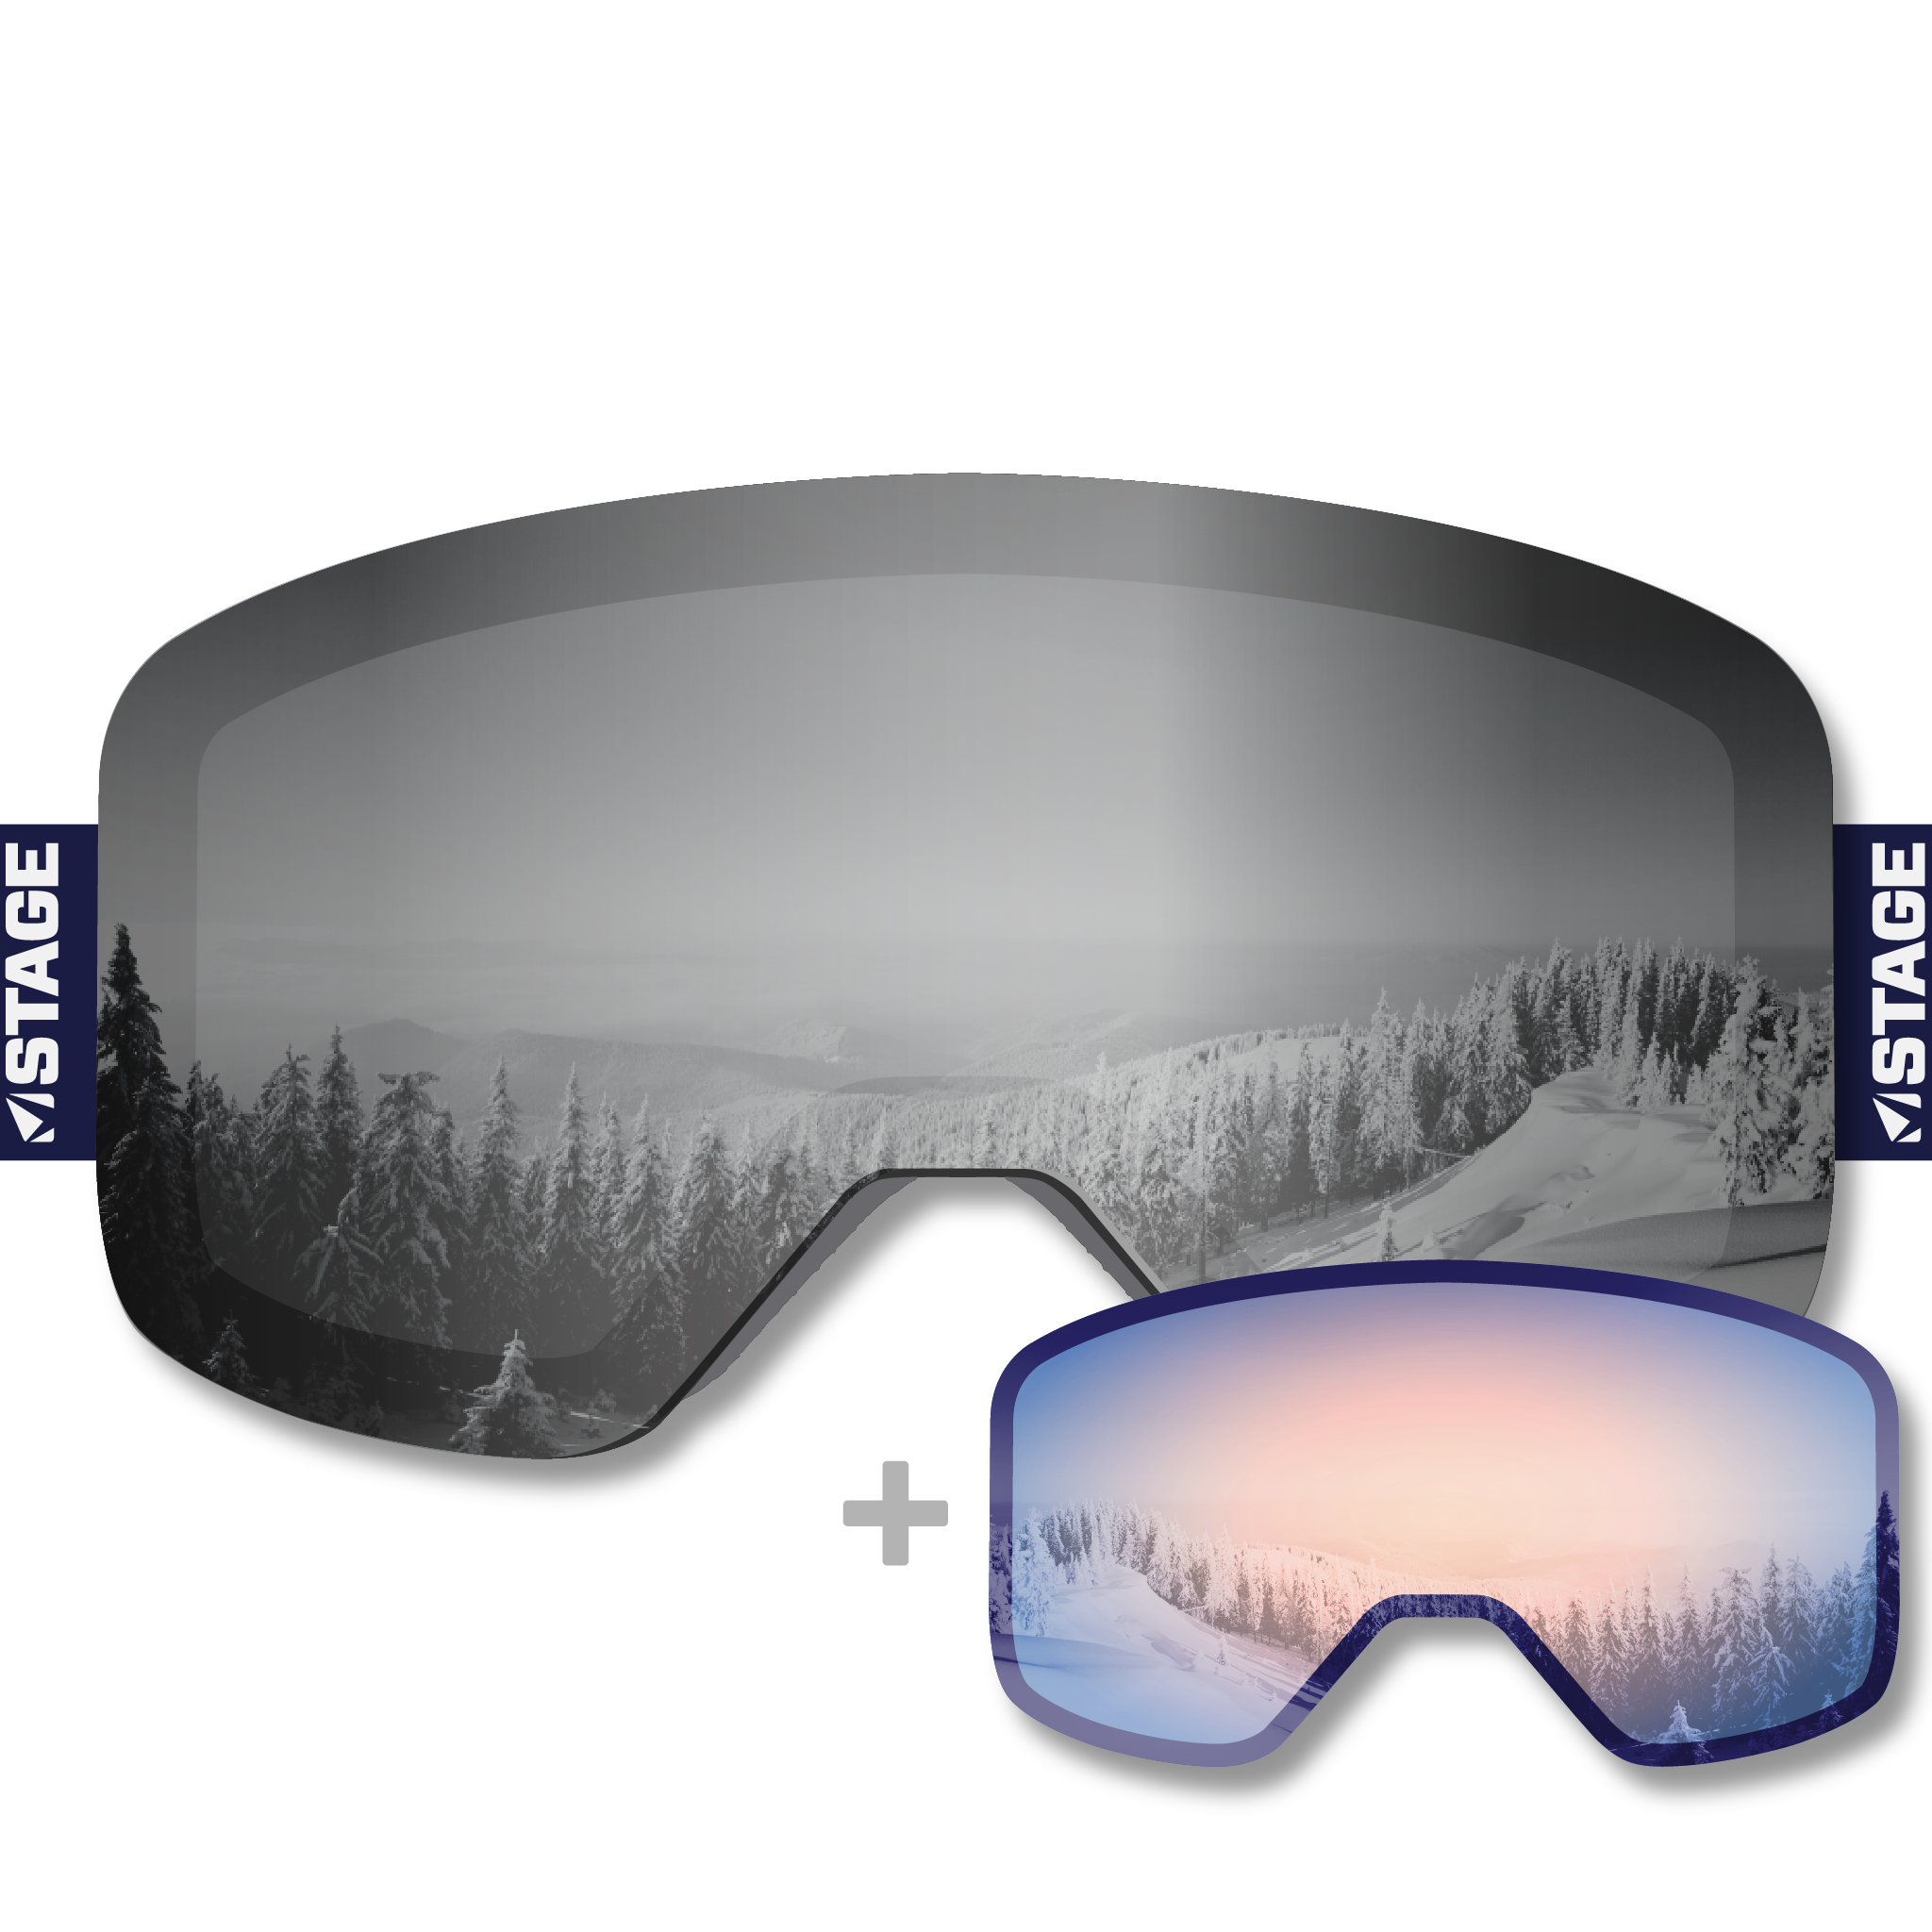 New England Disabled Sports Propnetic - Magnetic Ski Goggle + Bonus Lens